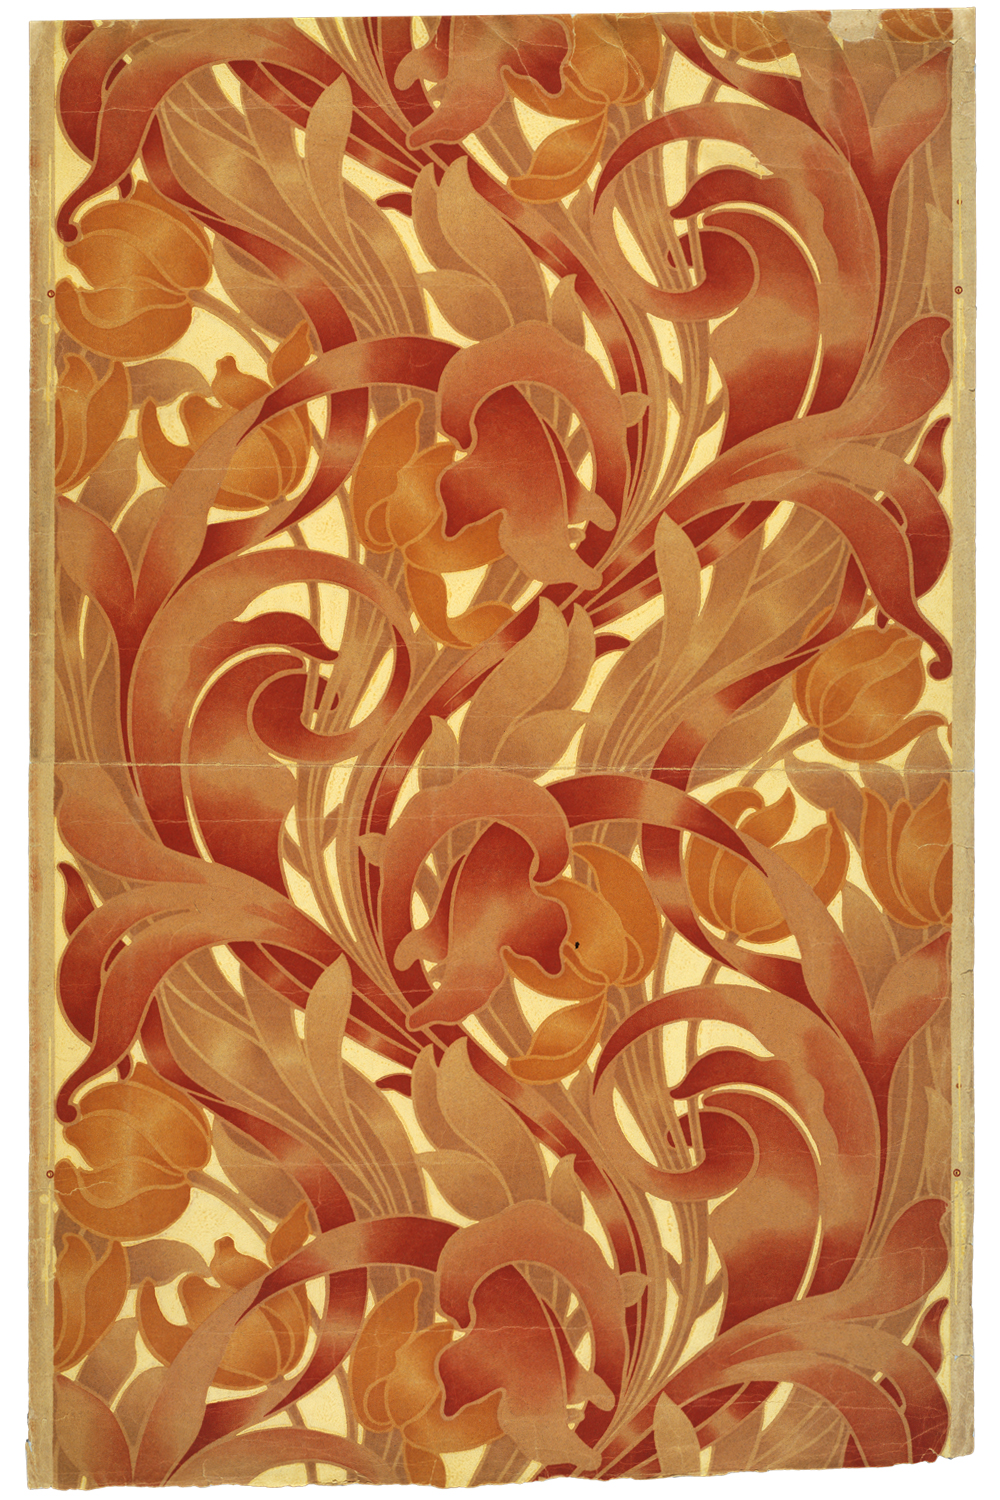 Art Nouveau Style - HD Wallpaper 